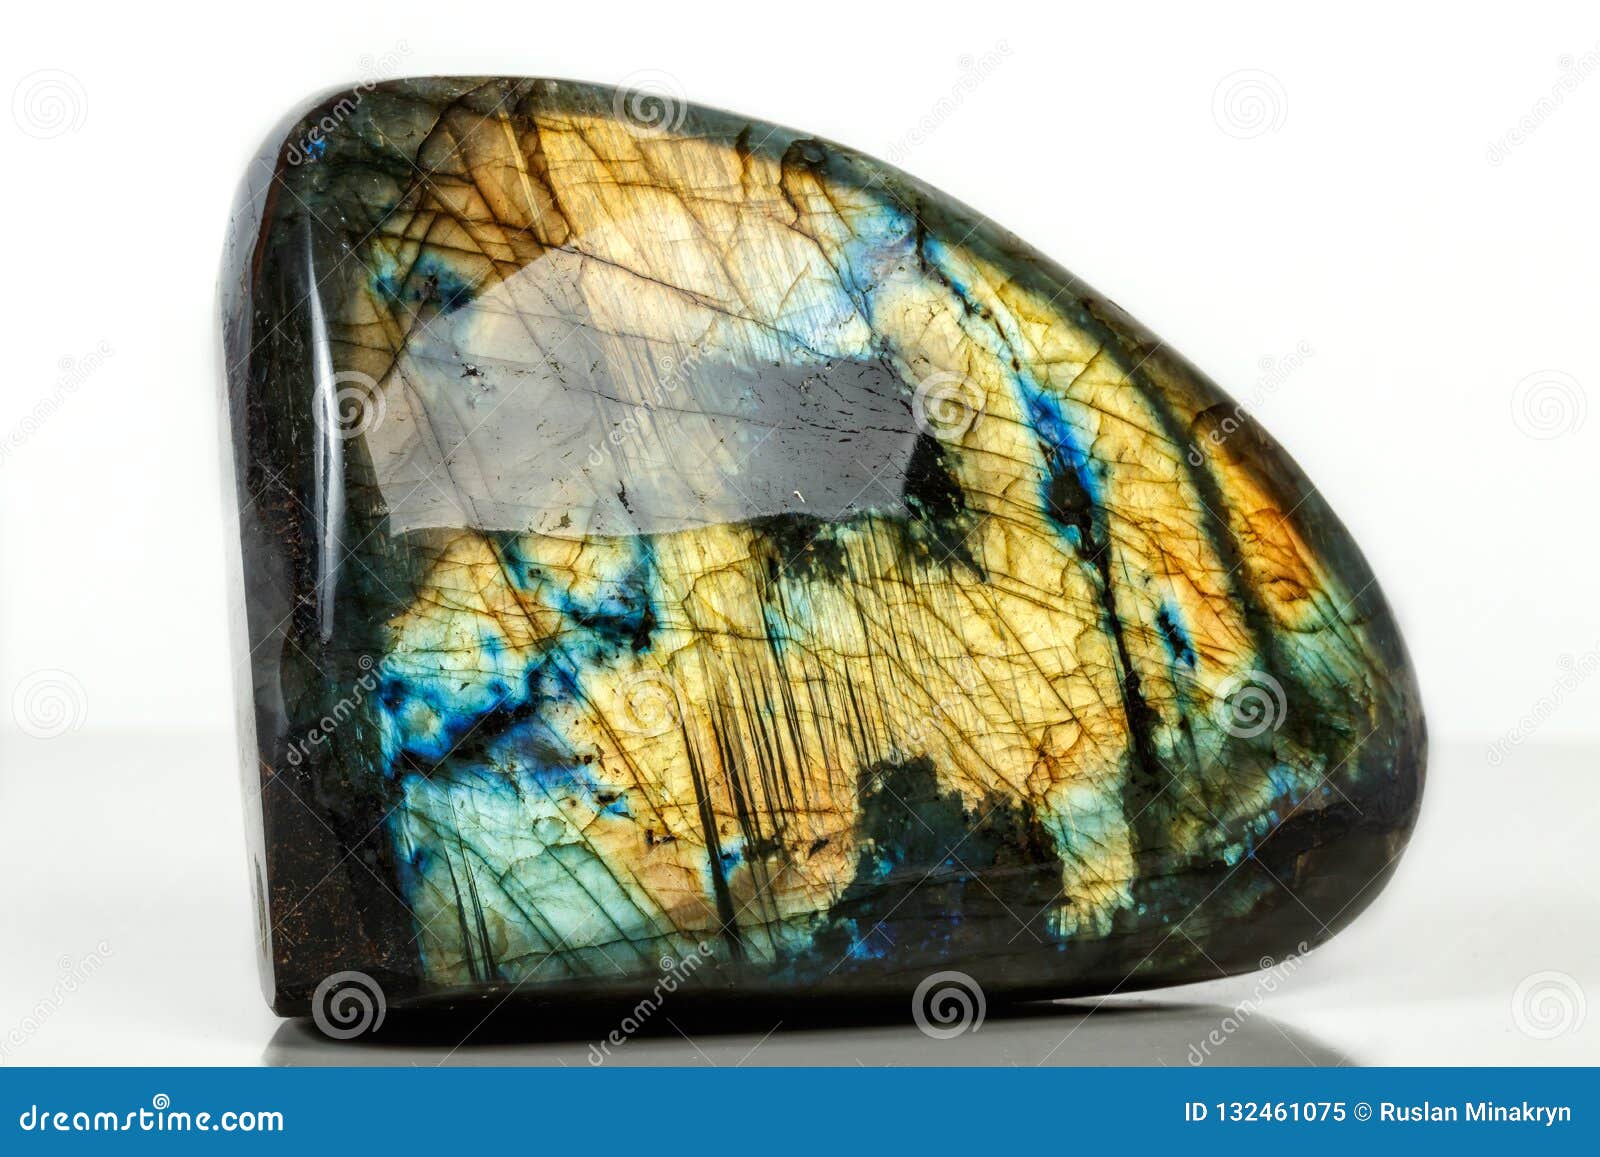 Macro Labradorite Mineral Stone On White Background Stock Image - Image ...